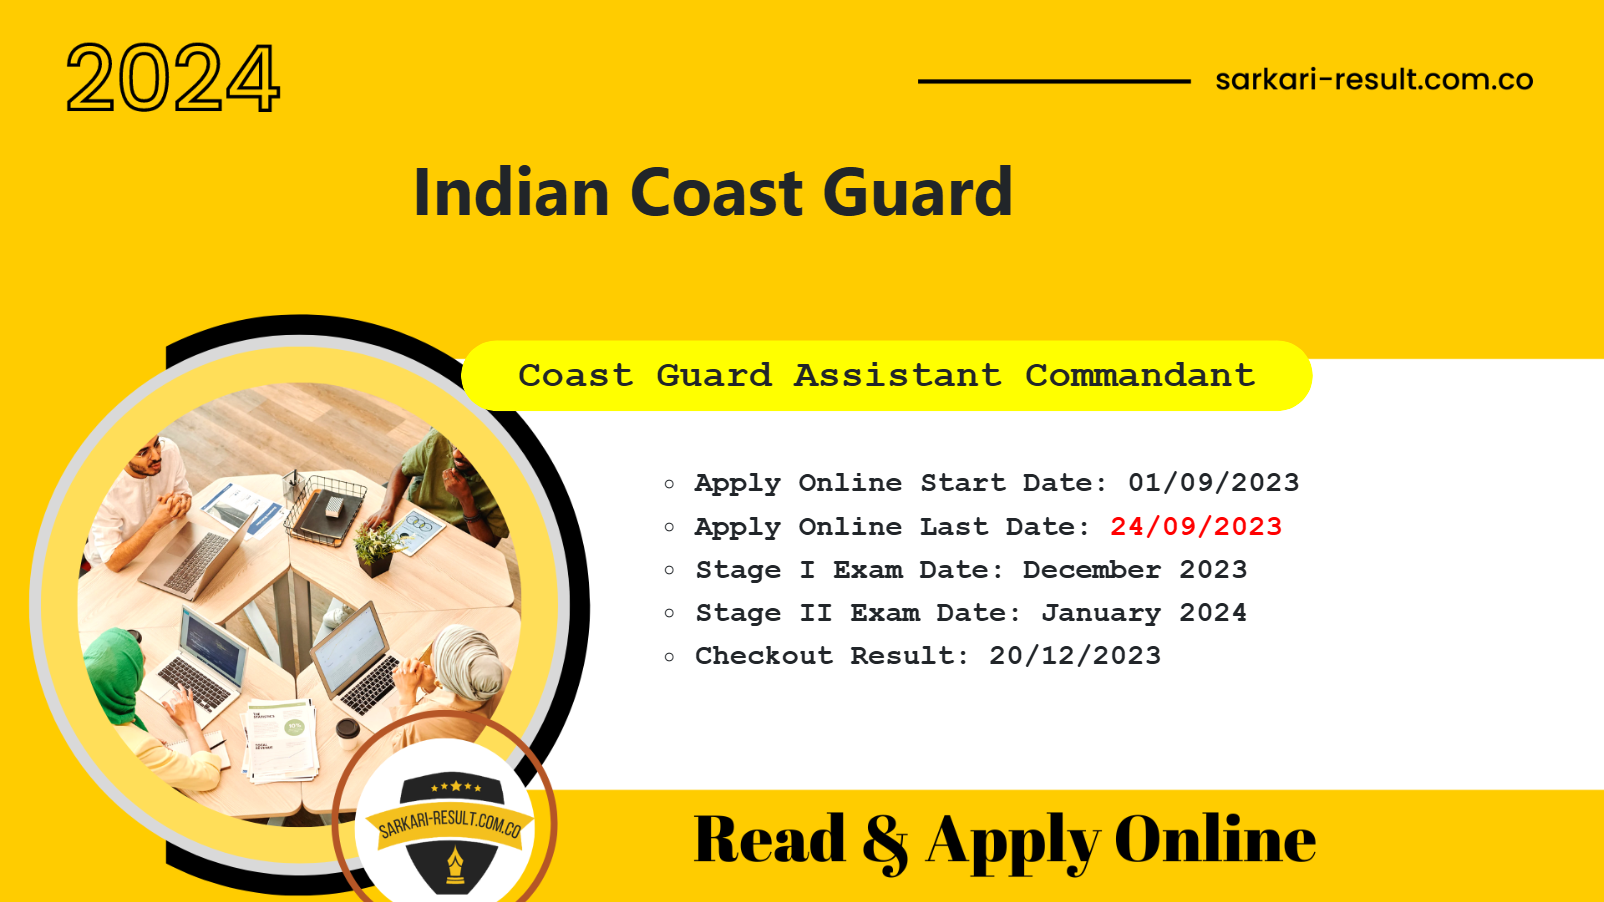 Apply Online Coast Guard Assistant Commandant 02/2024 Recruitment 2023 for 46 Post